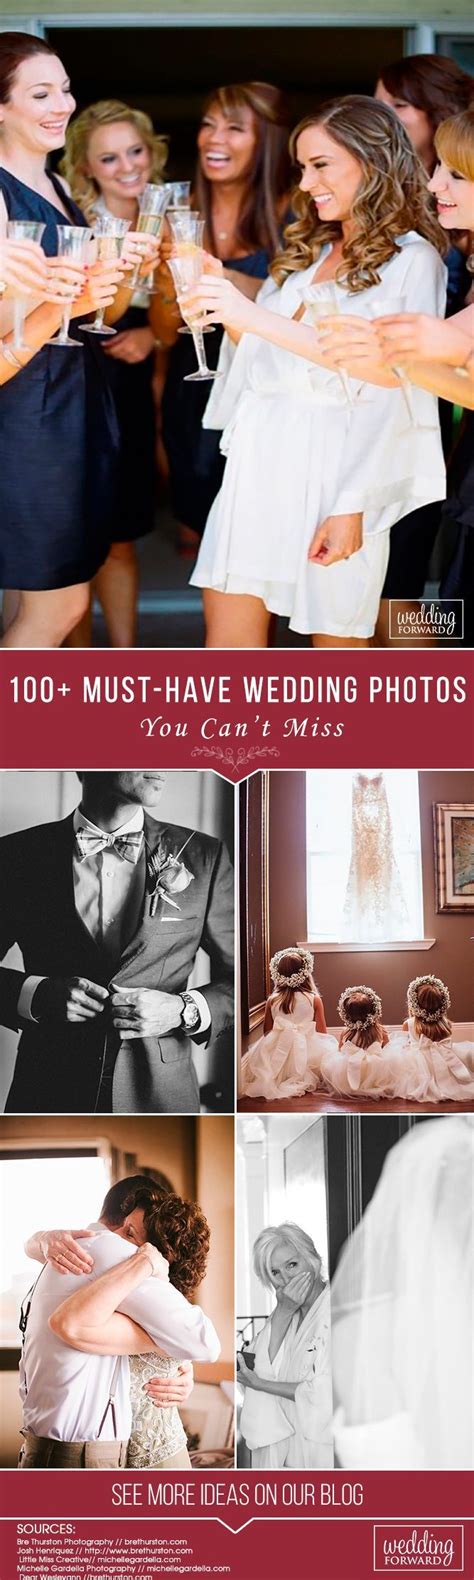 100 Must Have Wedding Photos Ideas Tips Wedding Forward Wedding Photos Digital Wedding